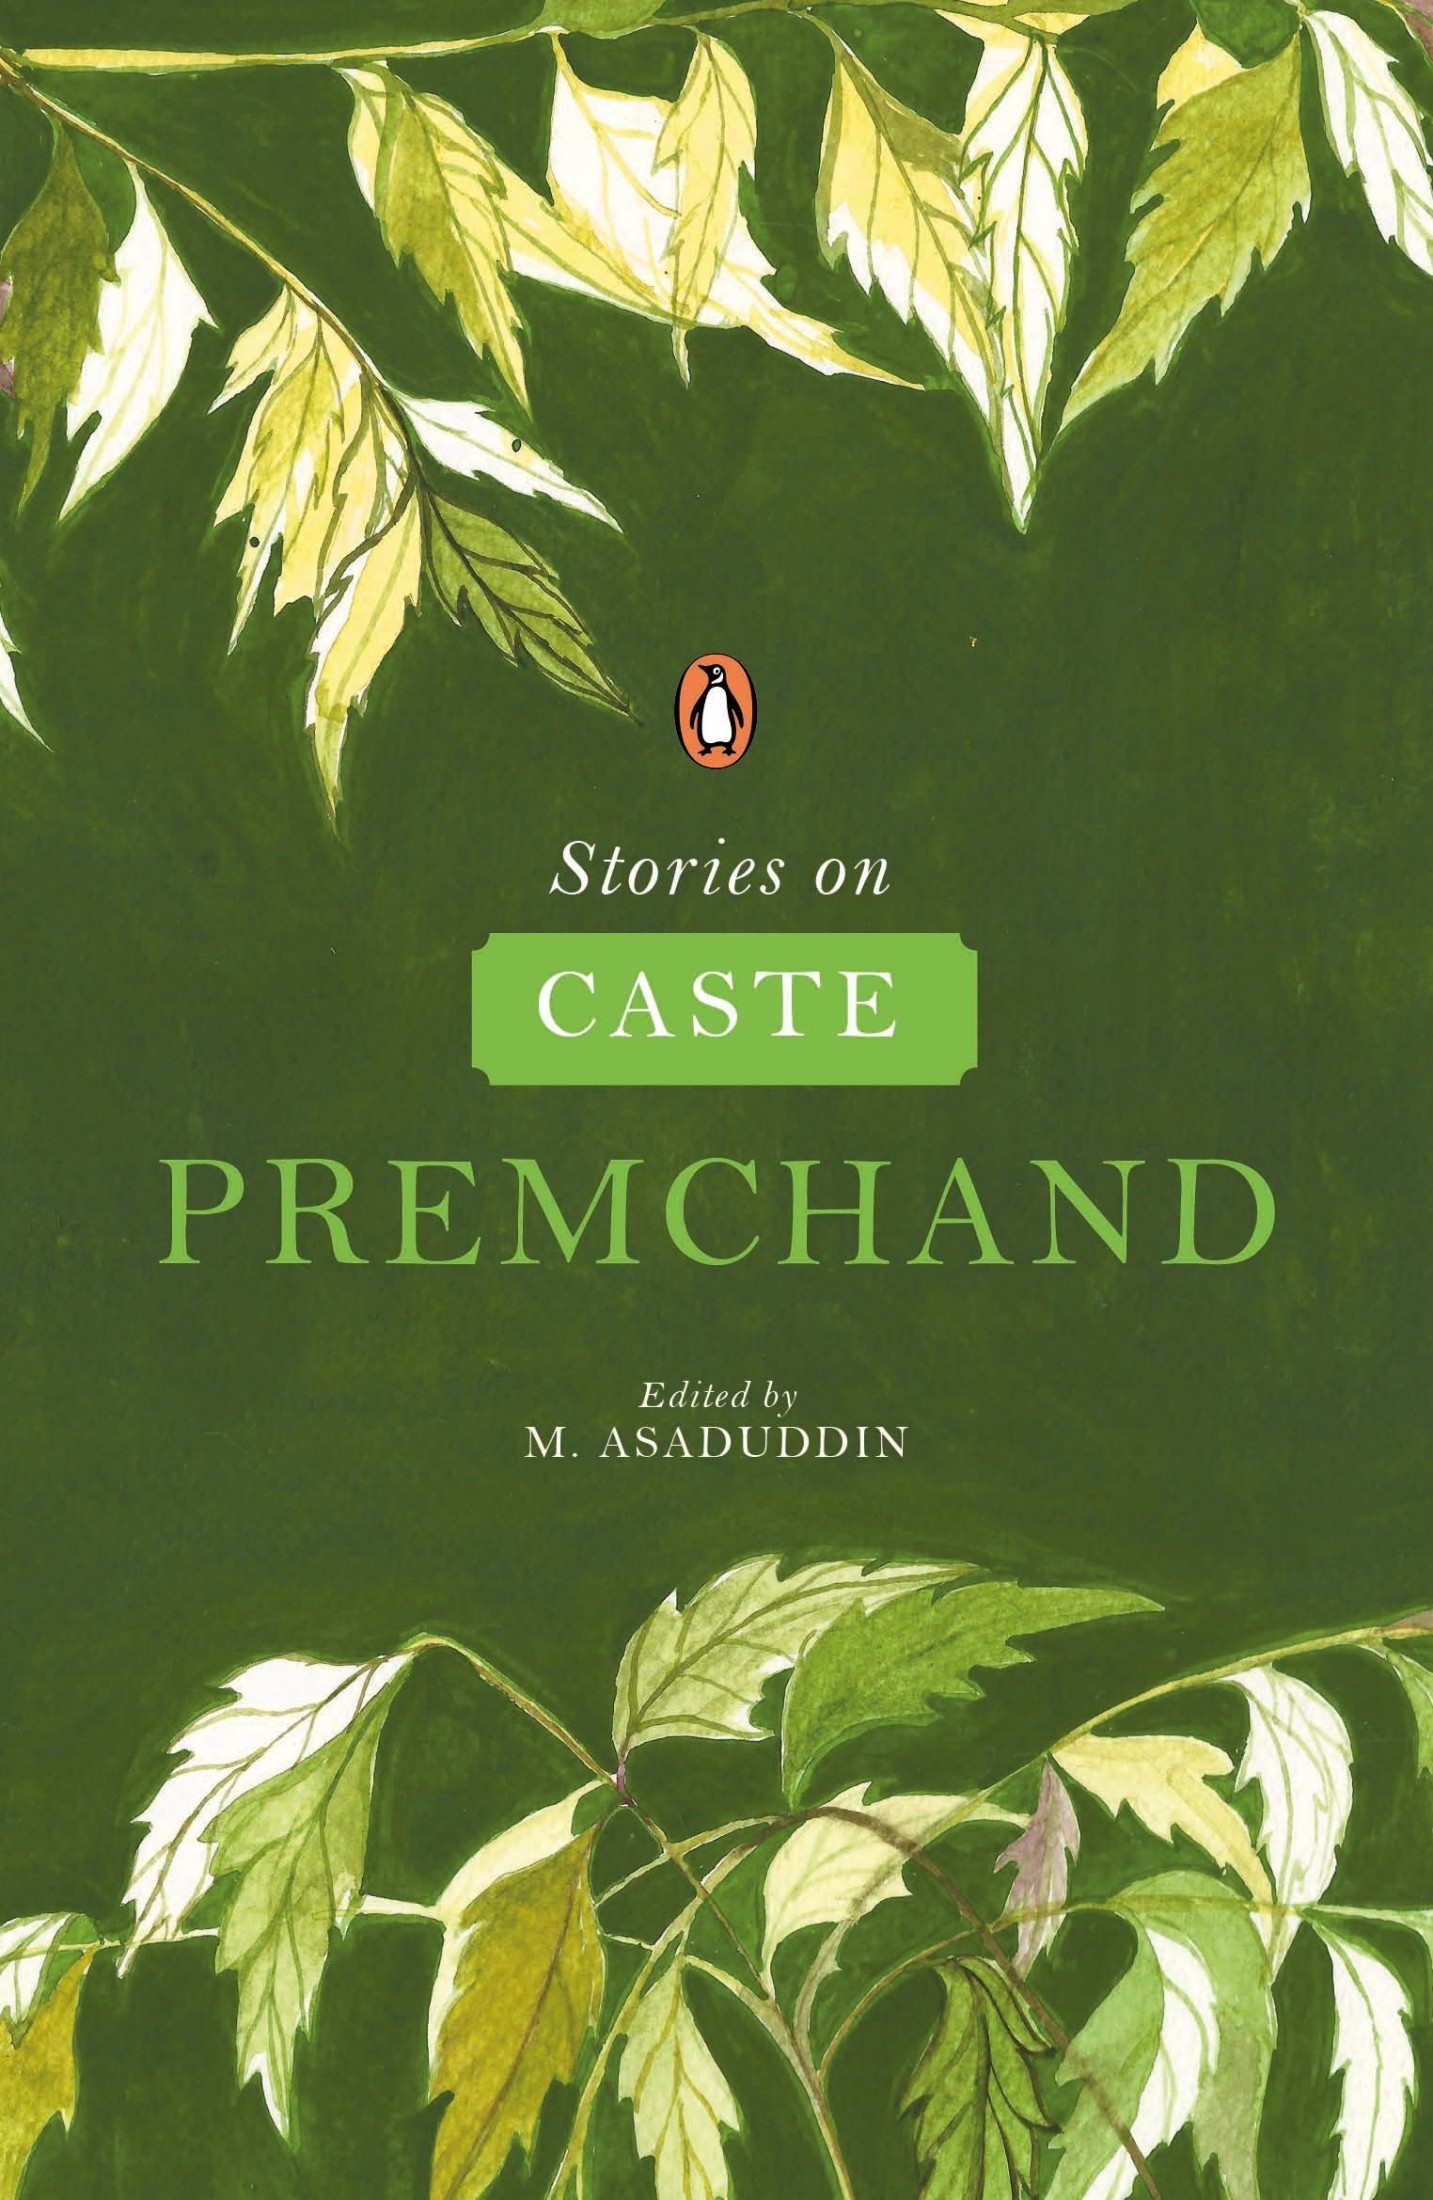 Stories on Caste